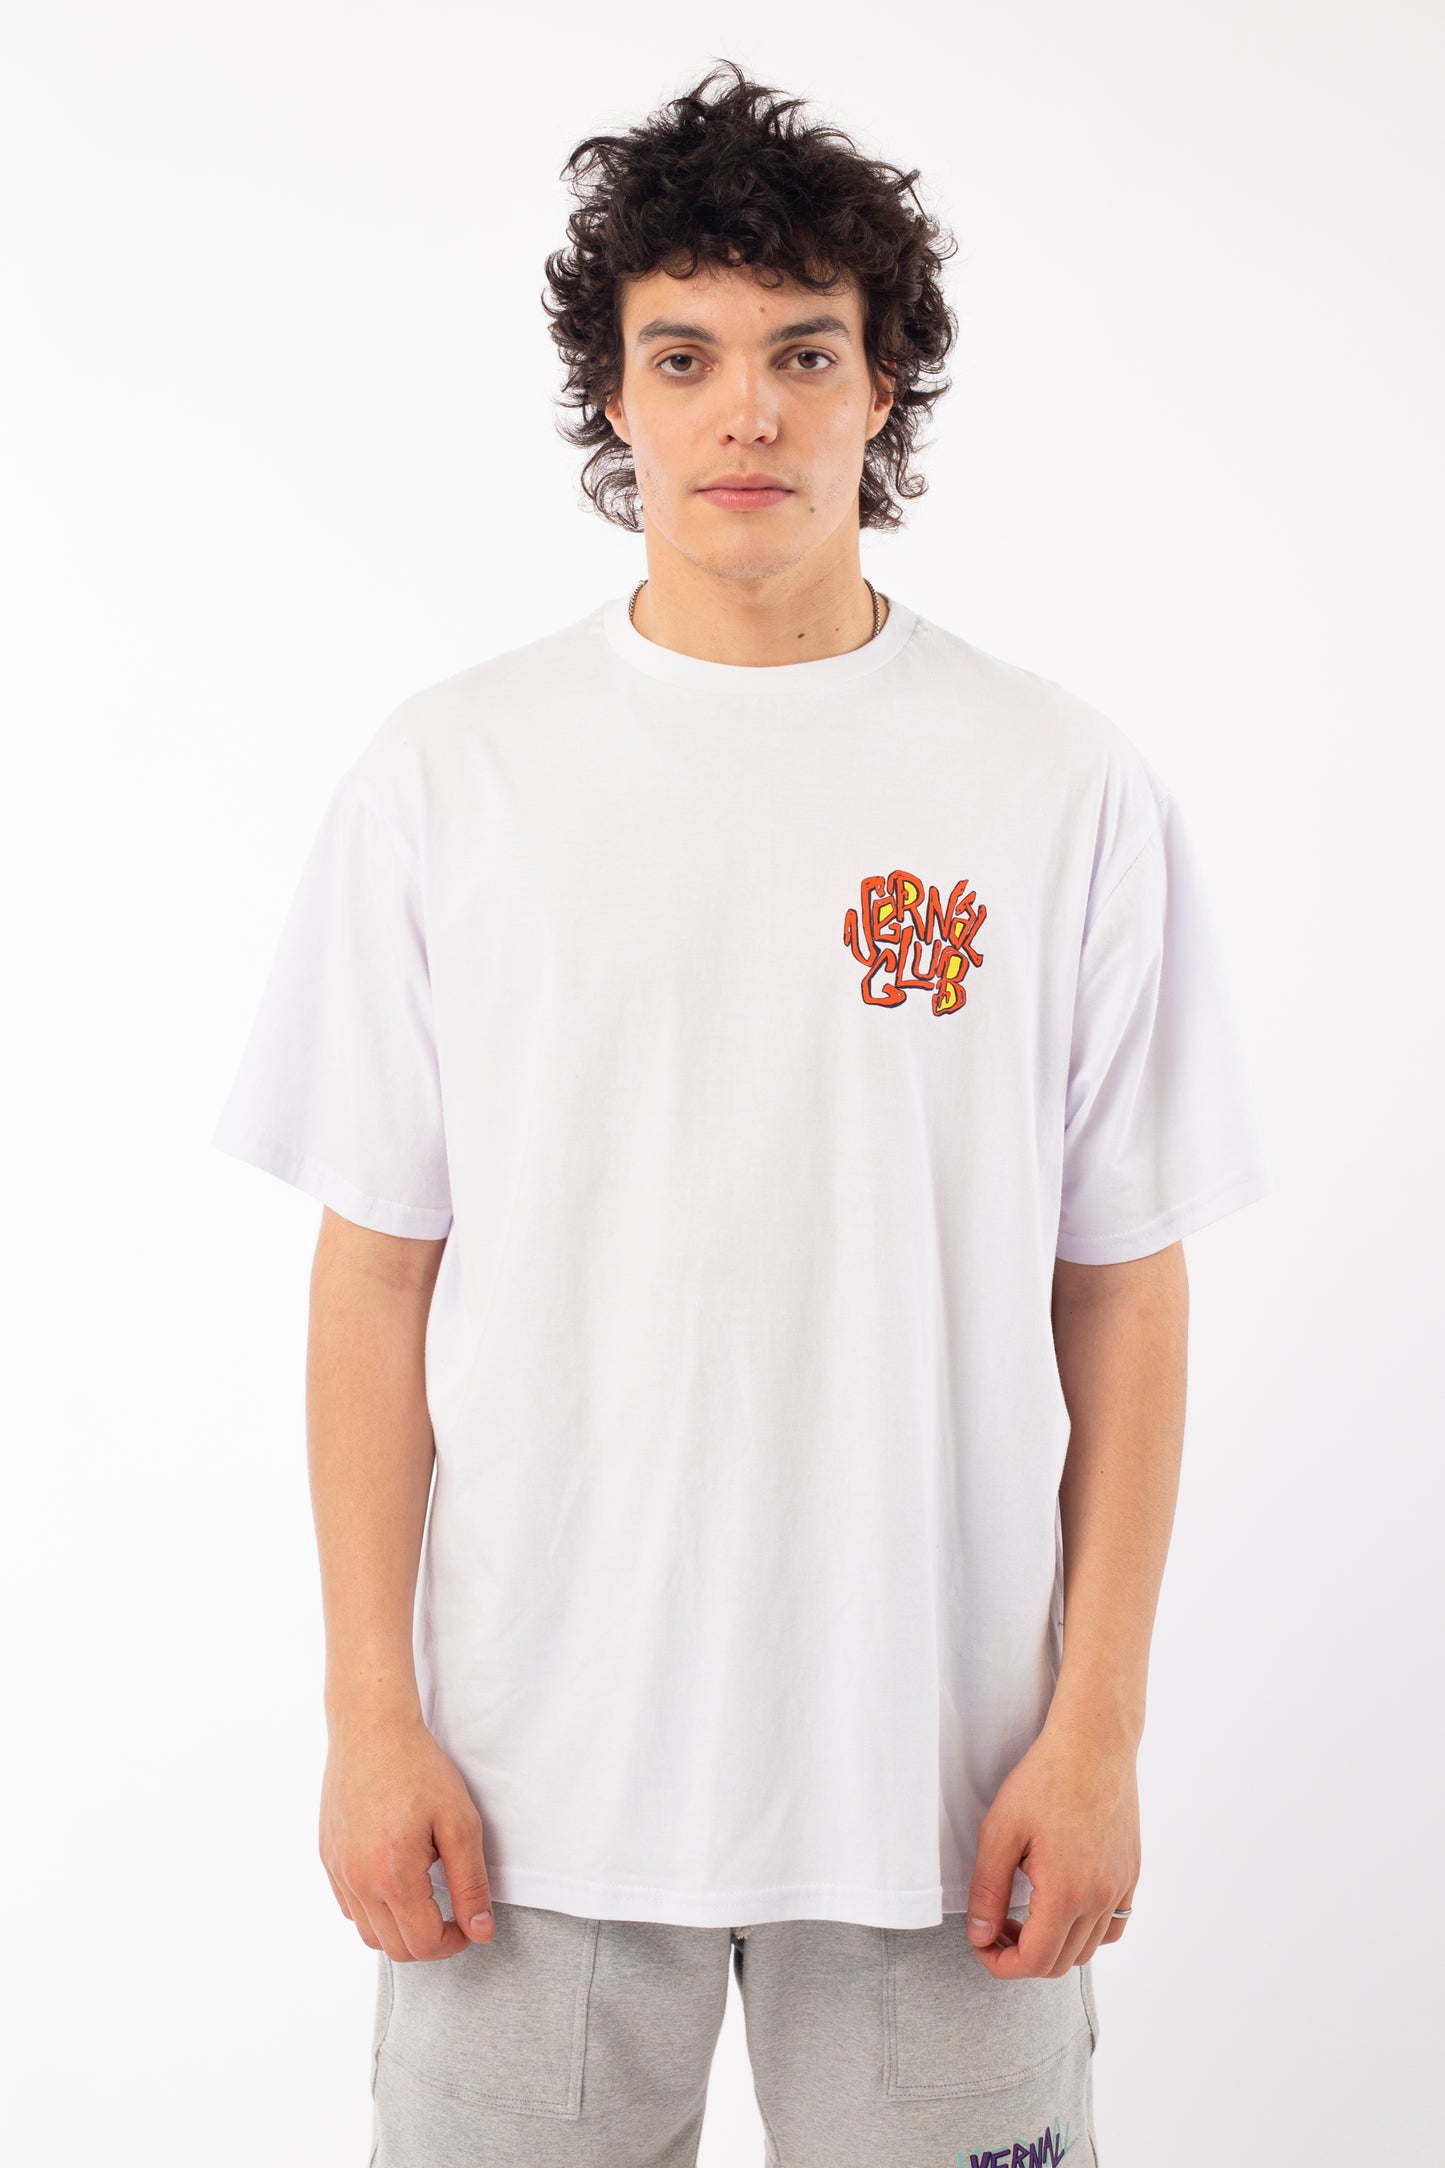 WiLLiS T-shirt (blanco)